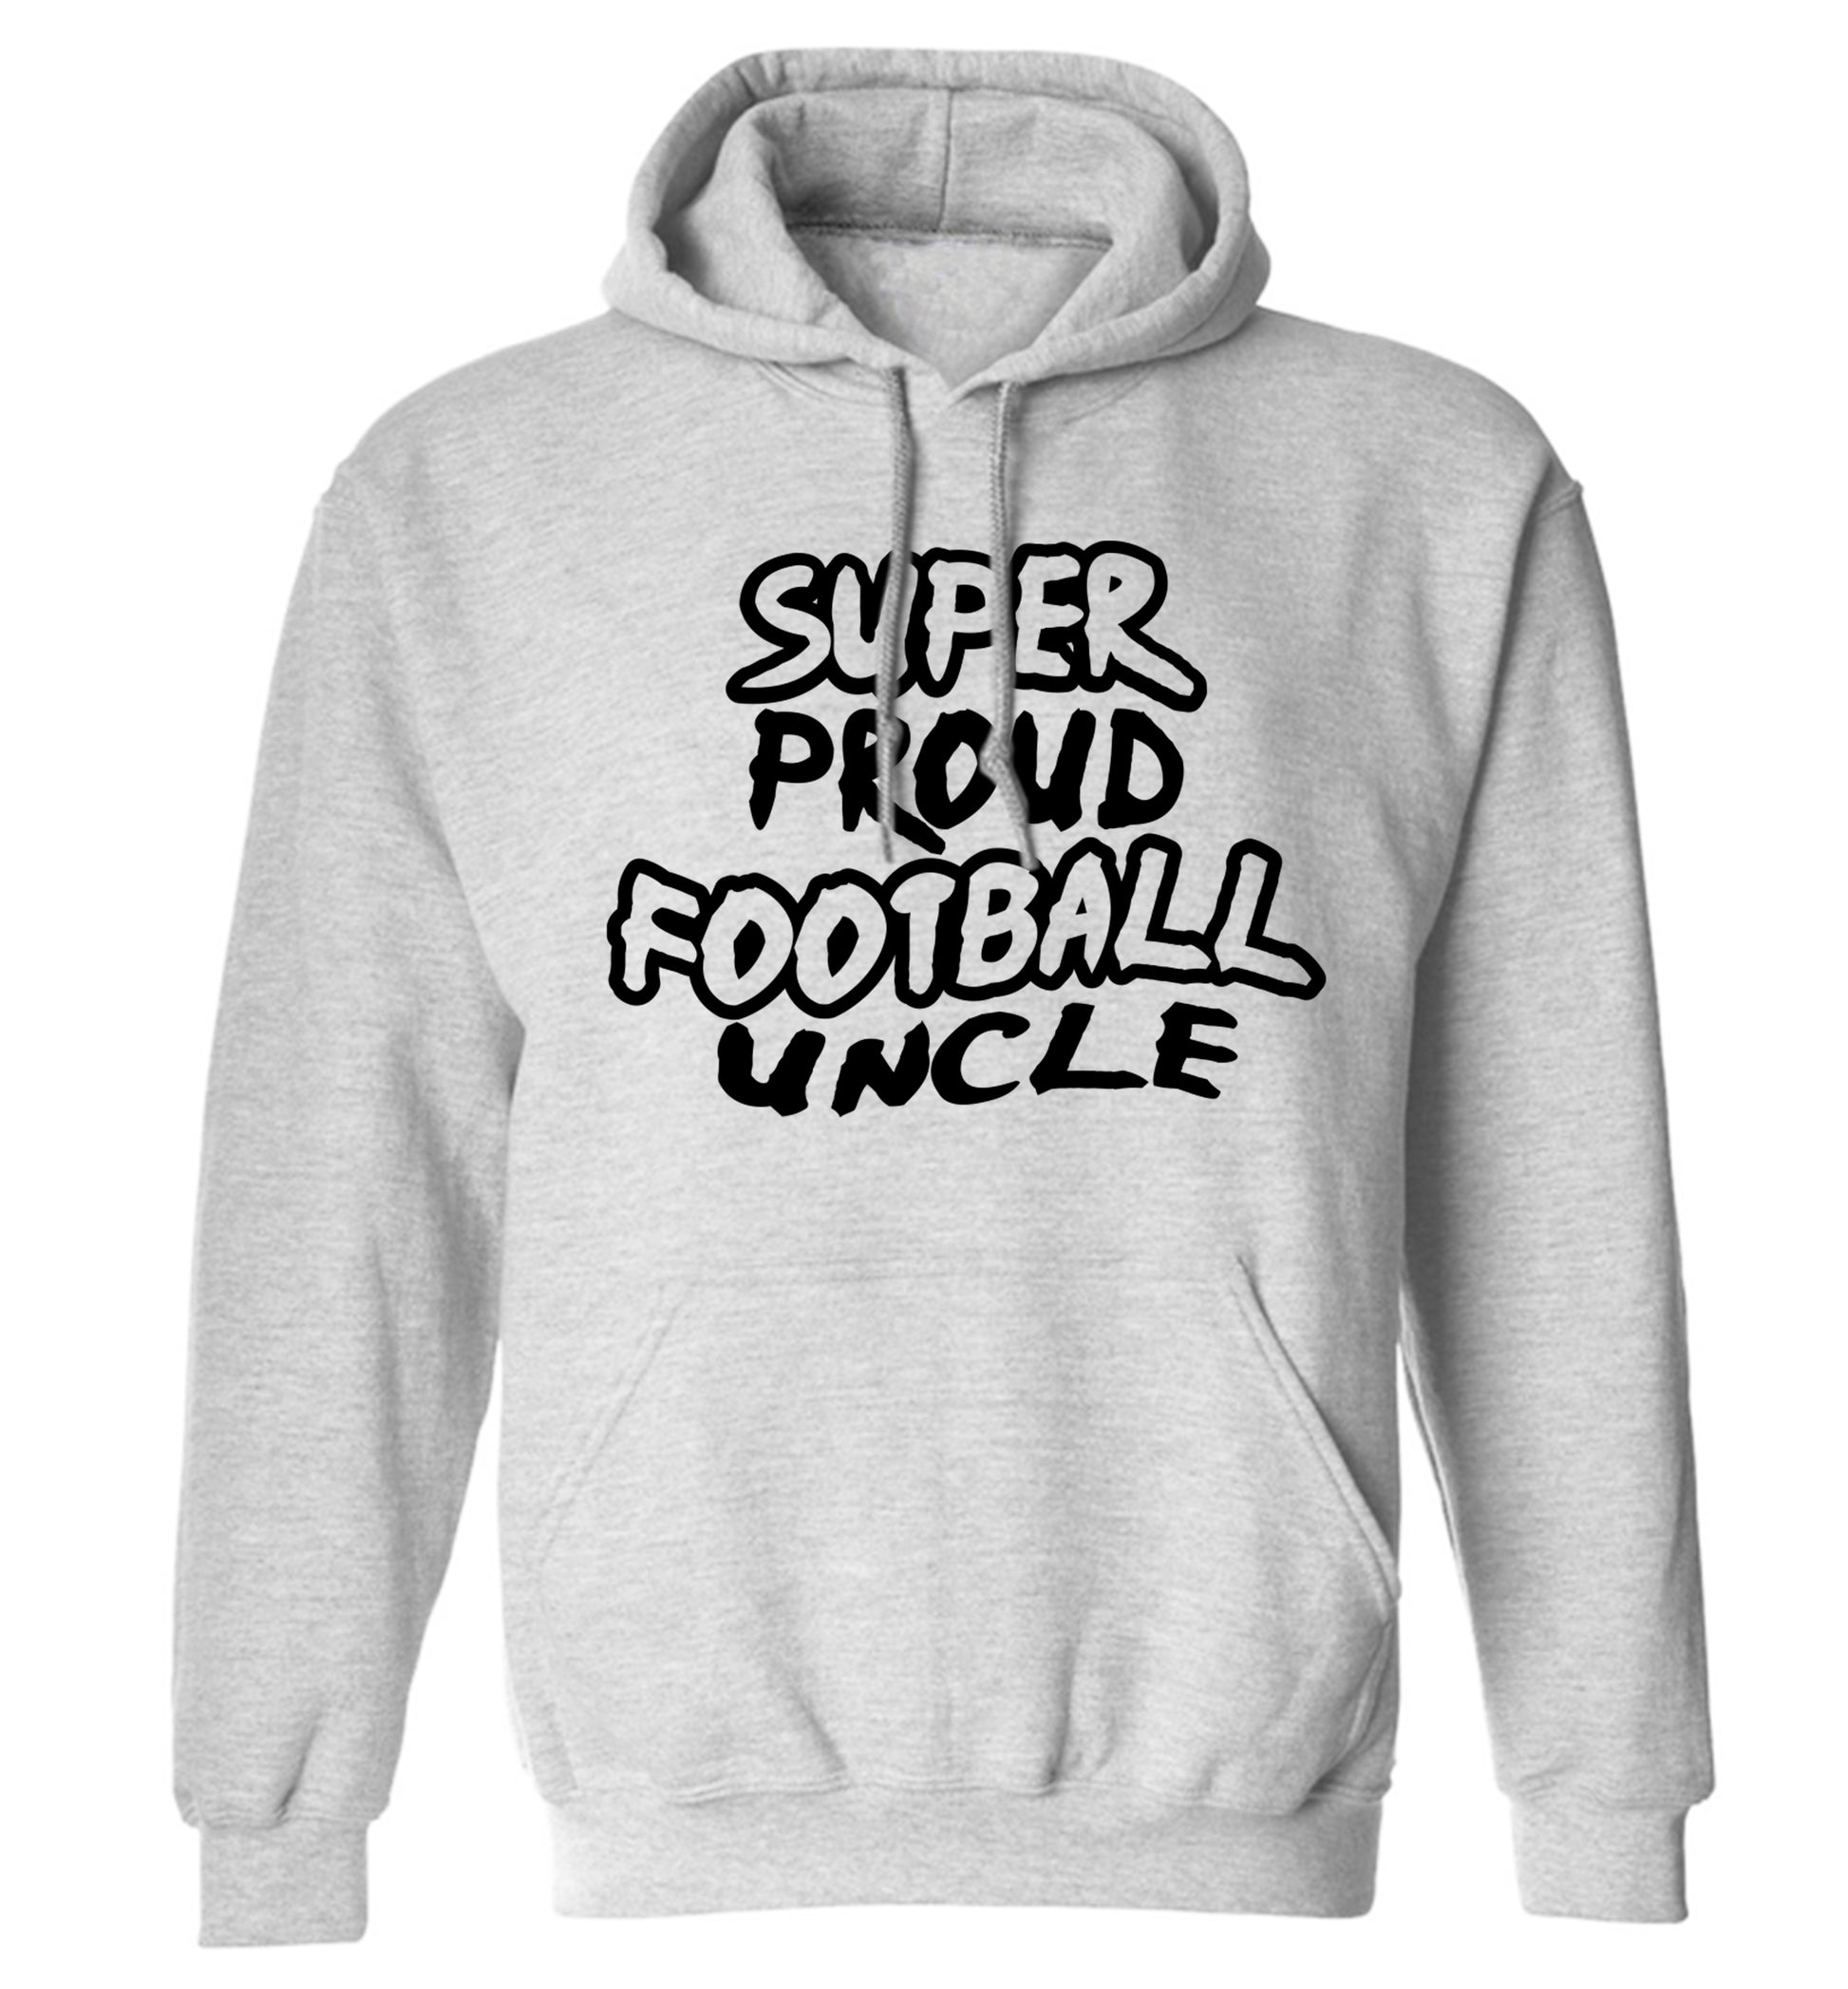 Super proud football uncle adults unisexgrey hoodie 2XL